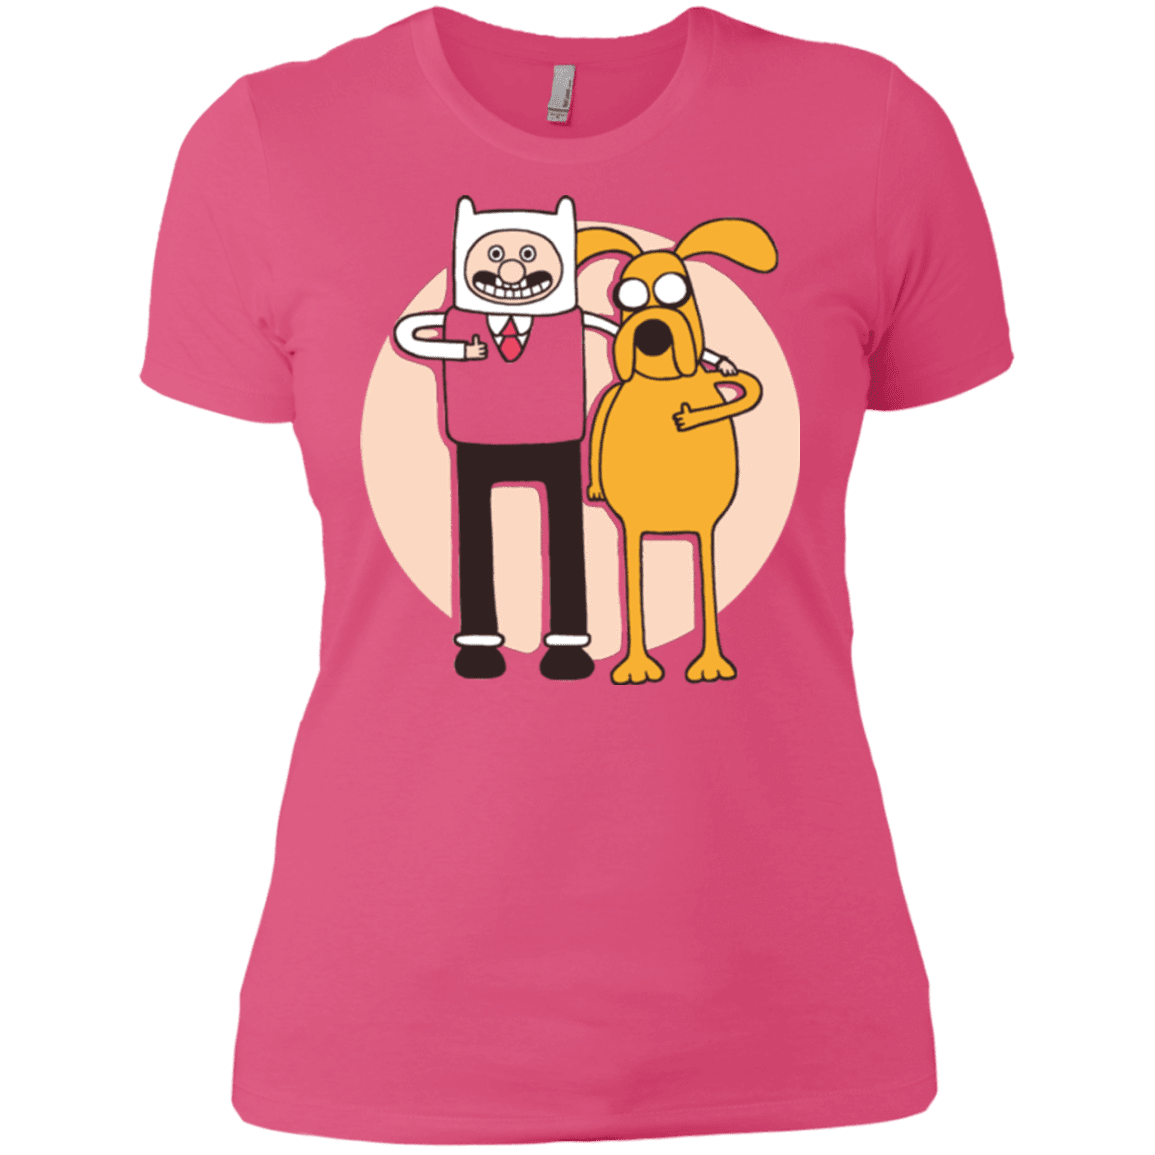 T-Shirts Hot Pink / X-Small A Grand Adventure Women's Premium T-Shirt